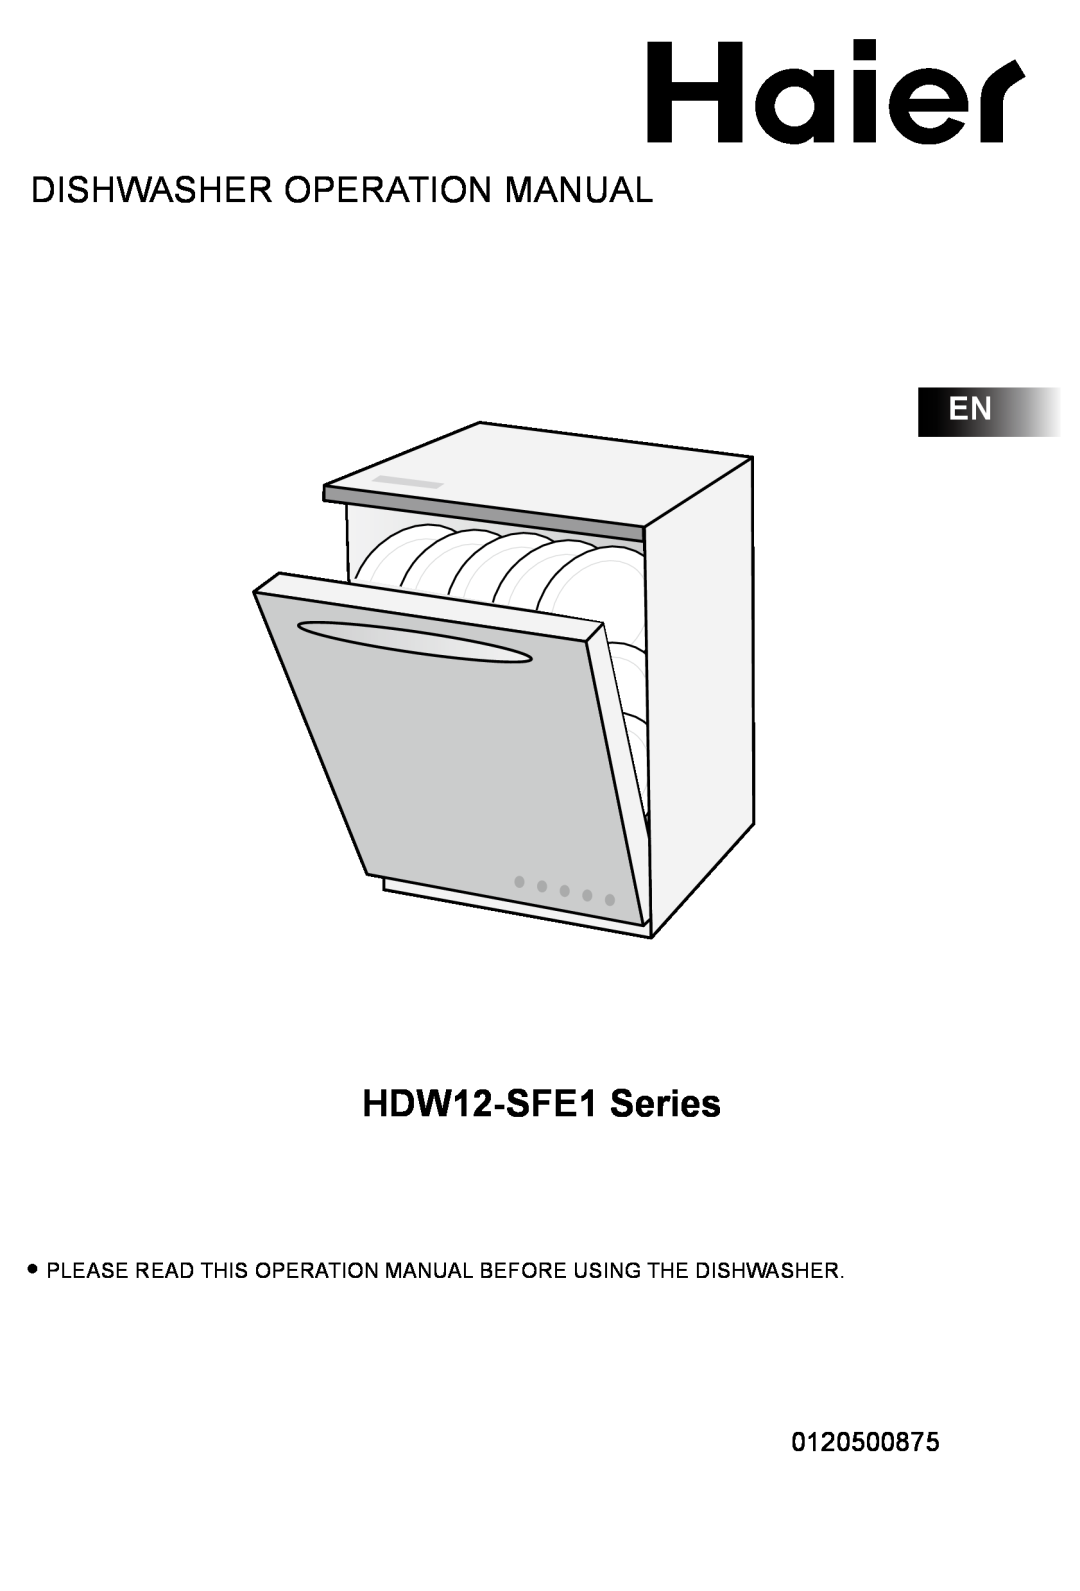 Haier operation manual HDW12-SFE1Series, 0120500875 